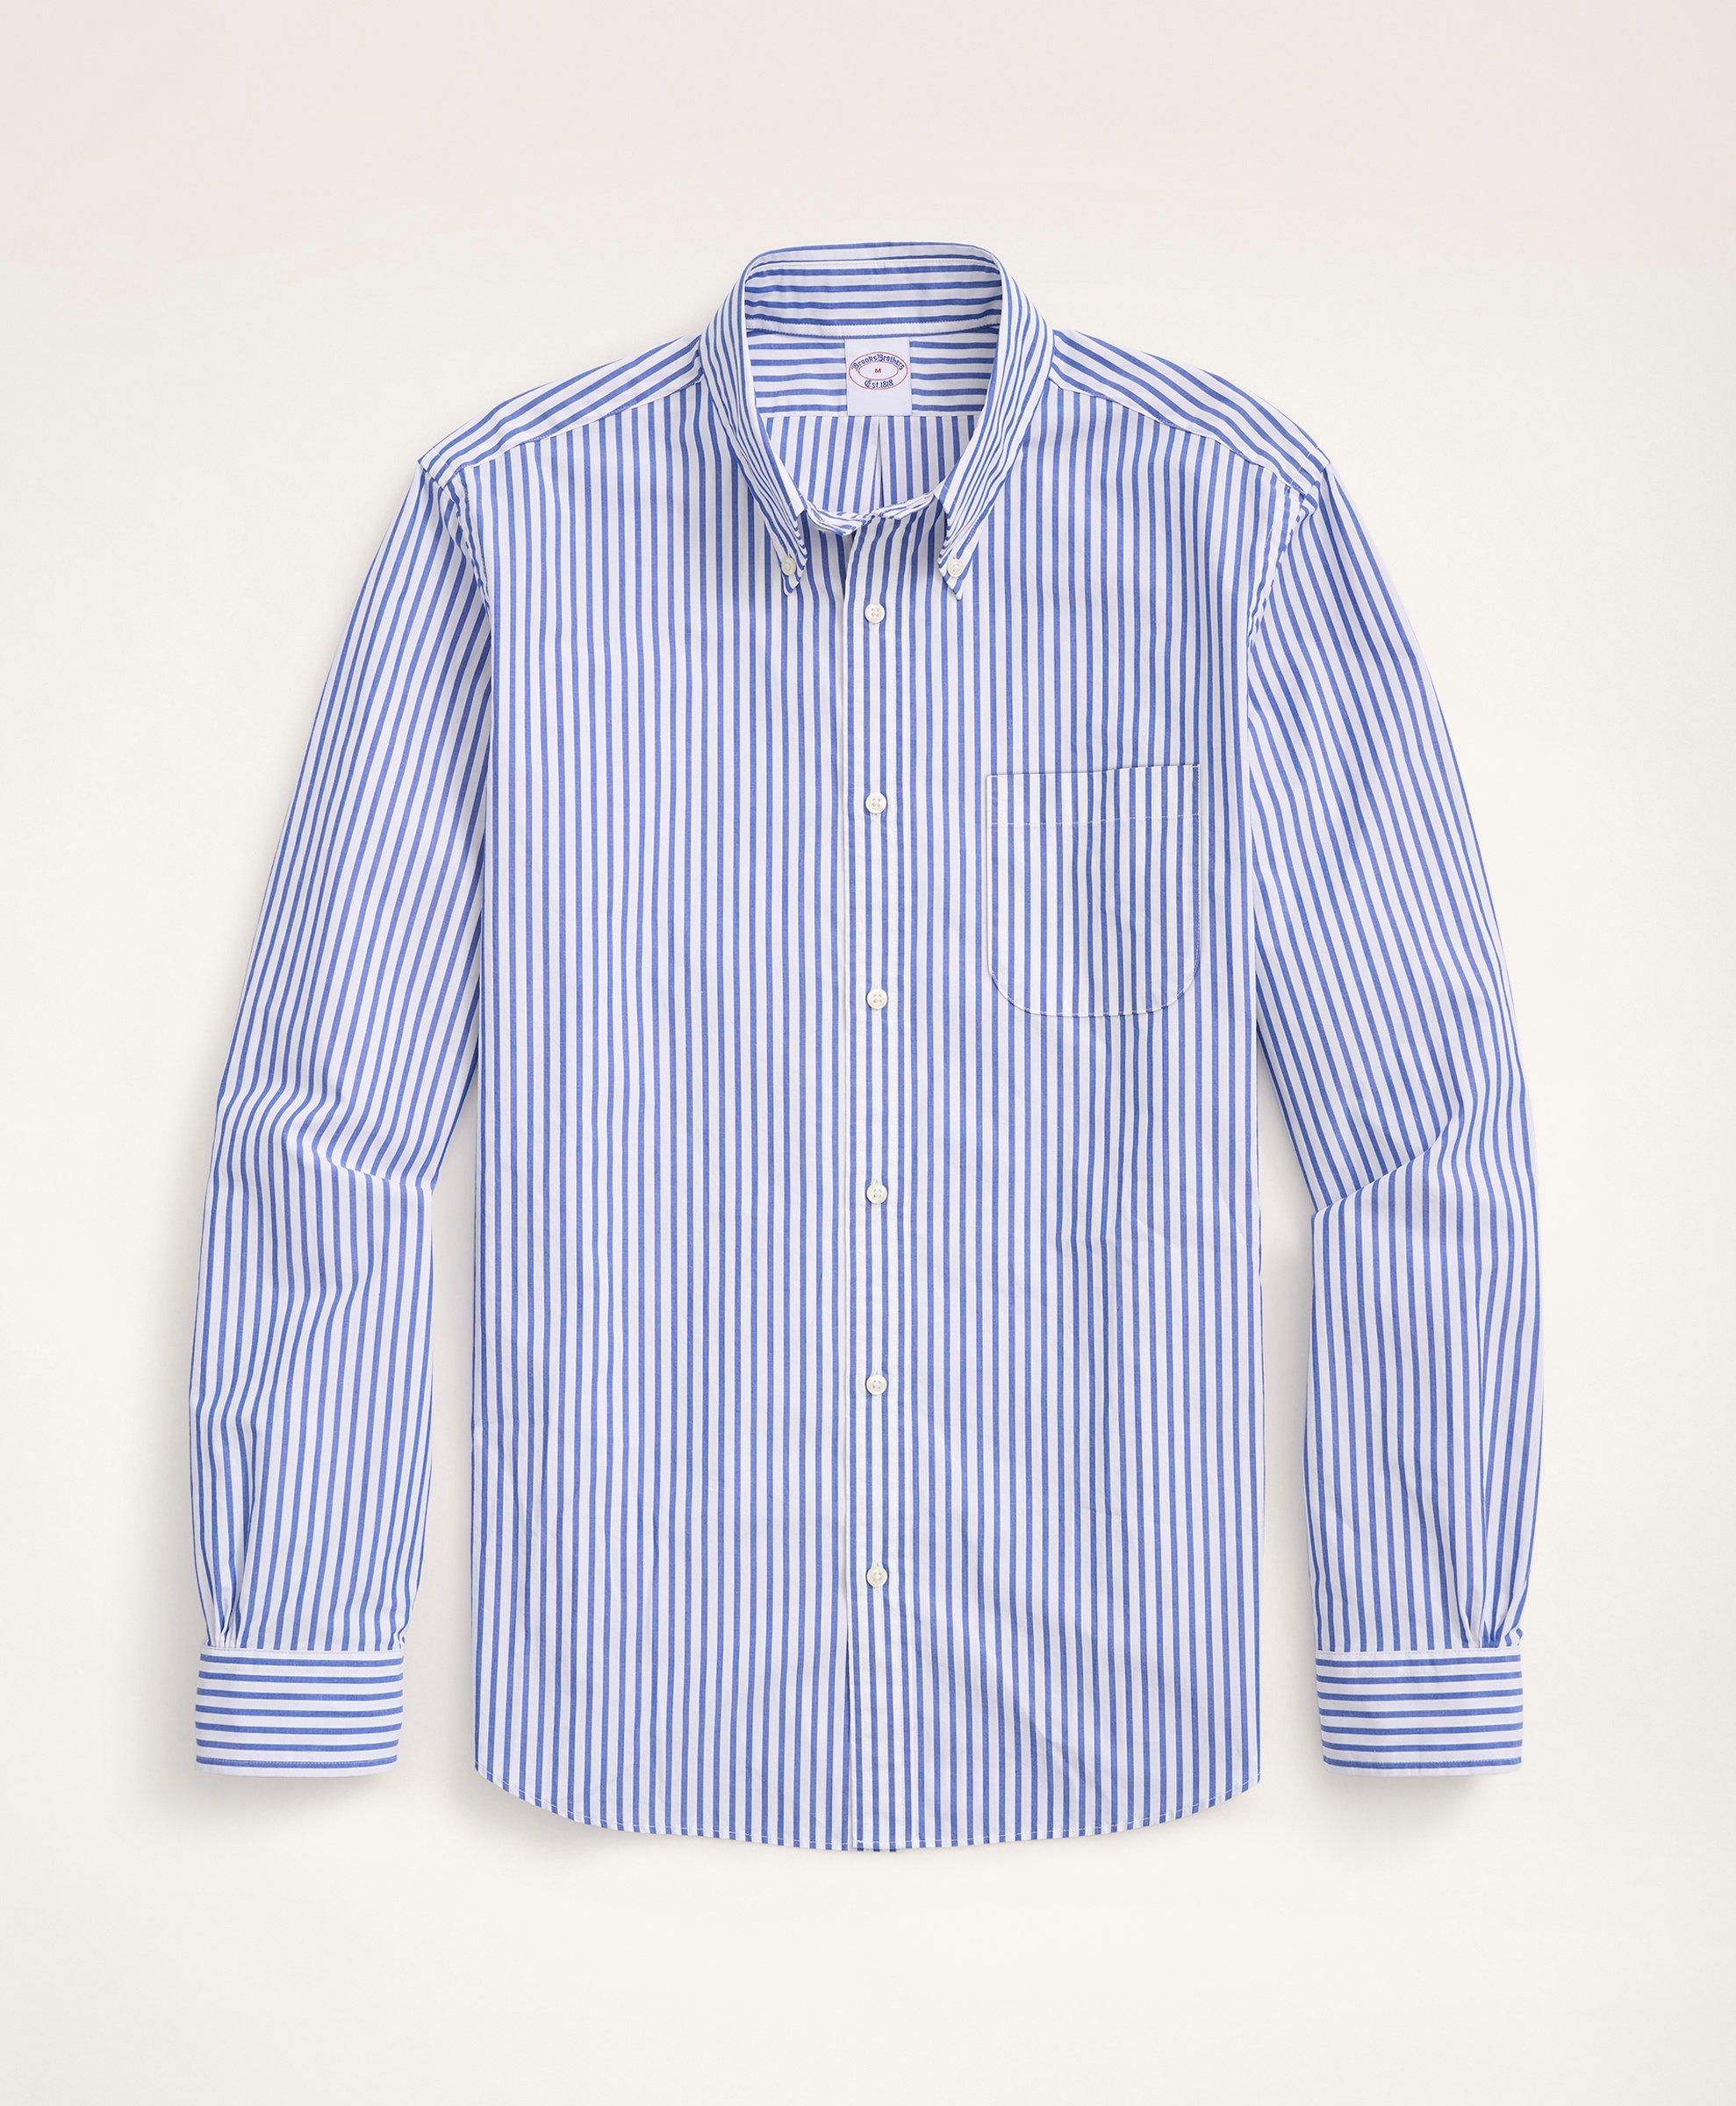 Big & Tall Friday Shirt, Poplin Bengal Stripe, image 1